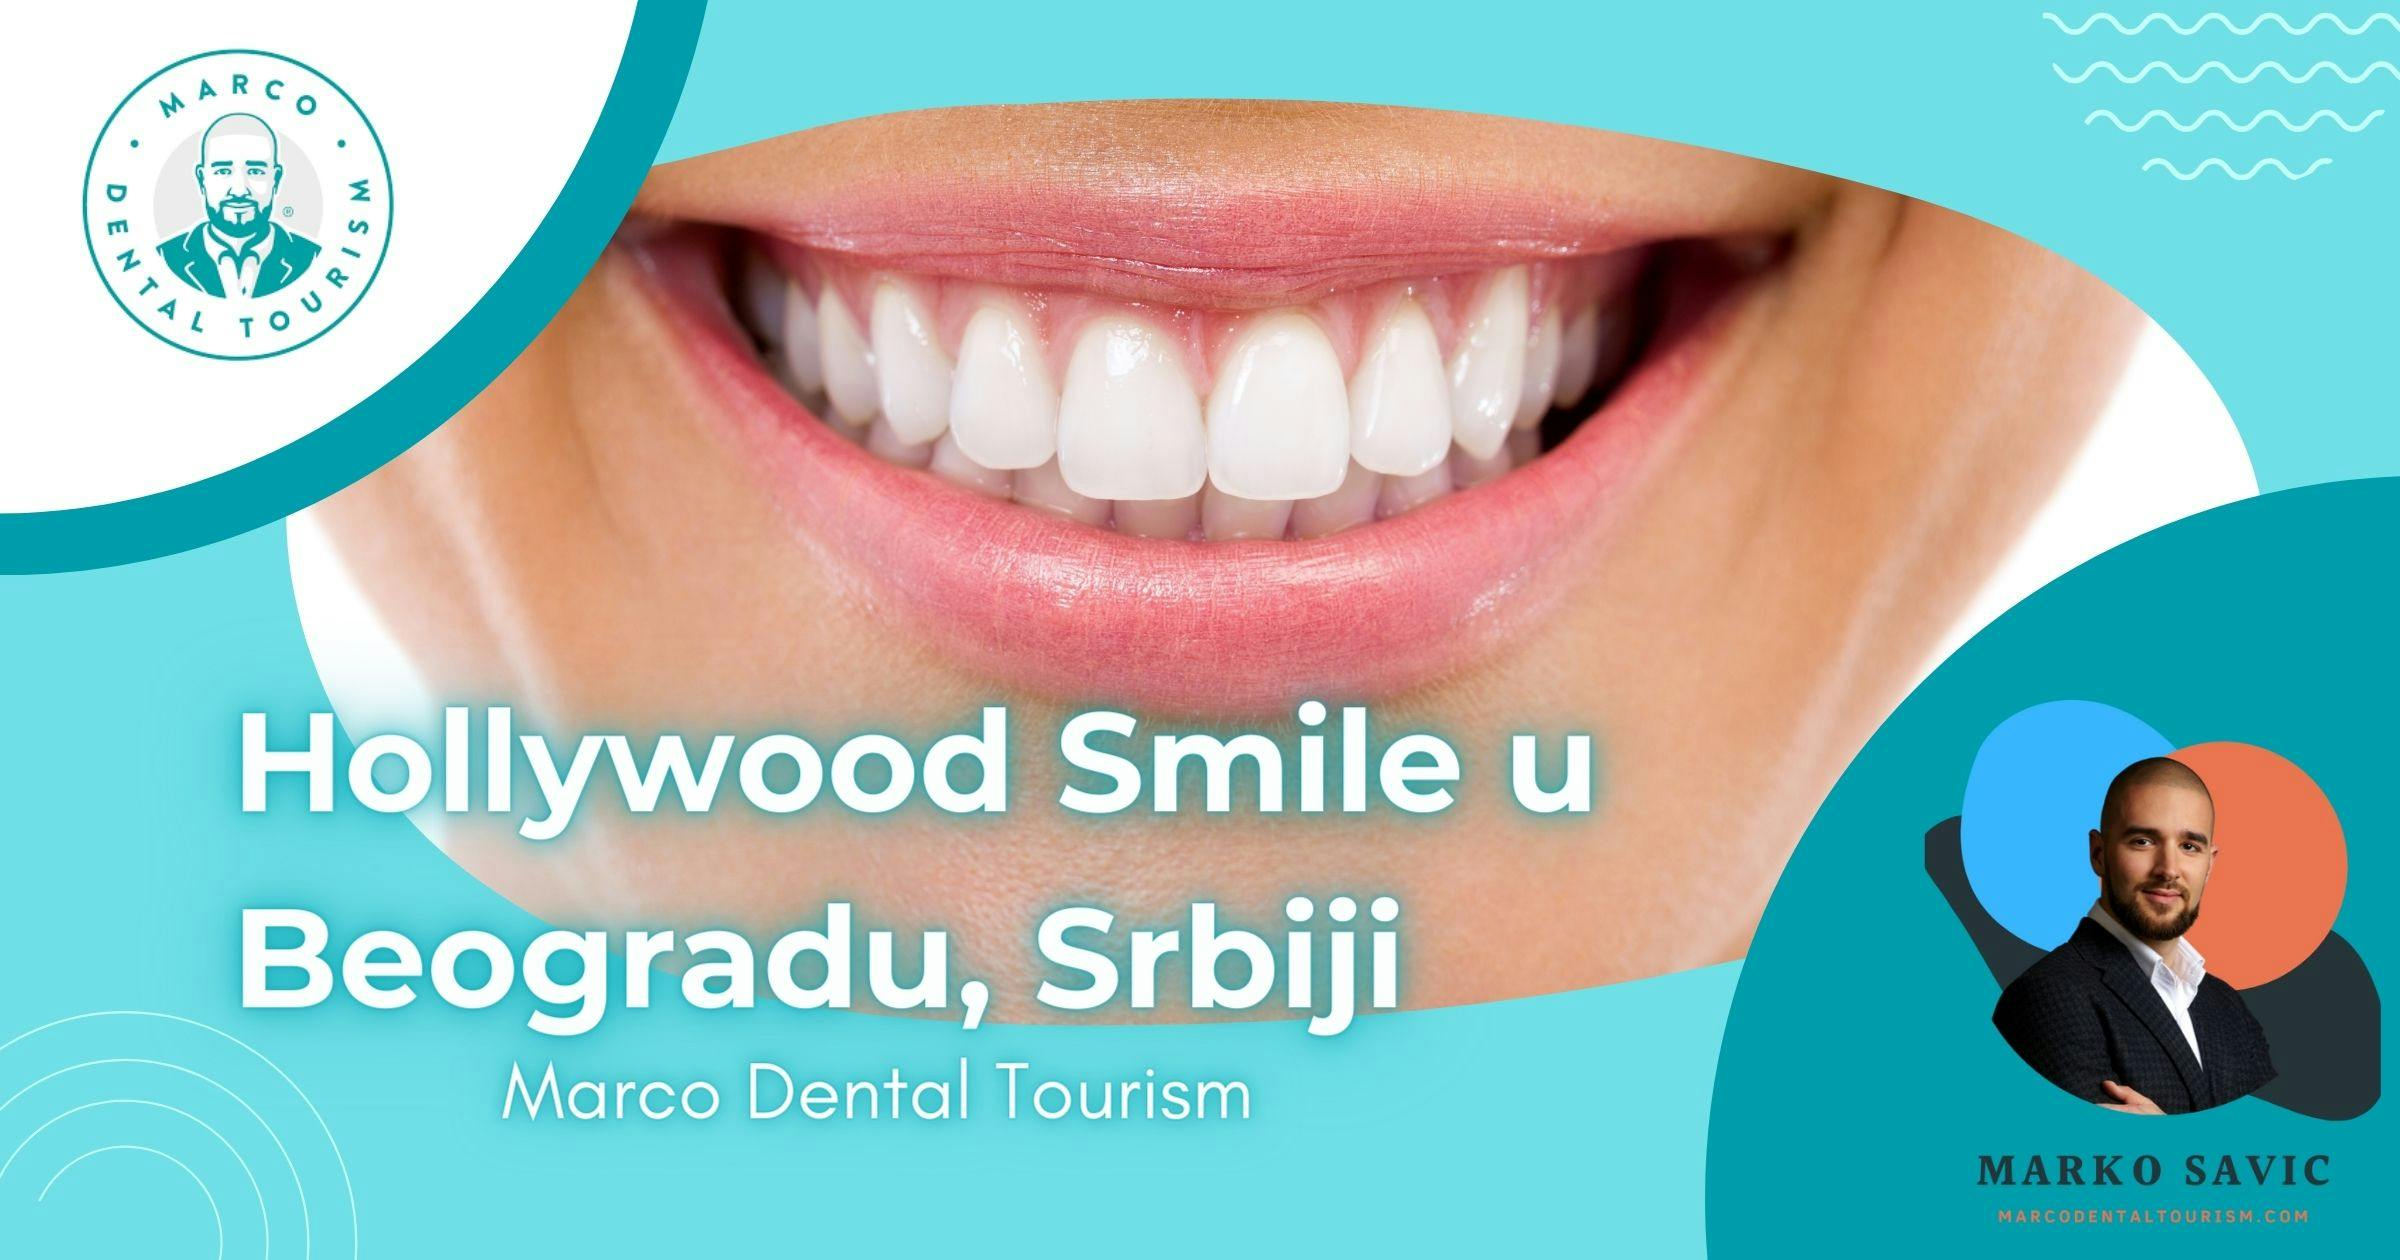 Hollywood Smile Beograd Srbija - Marco Dental Tourism